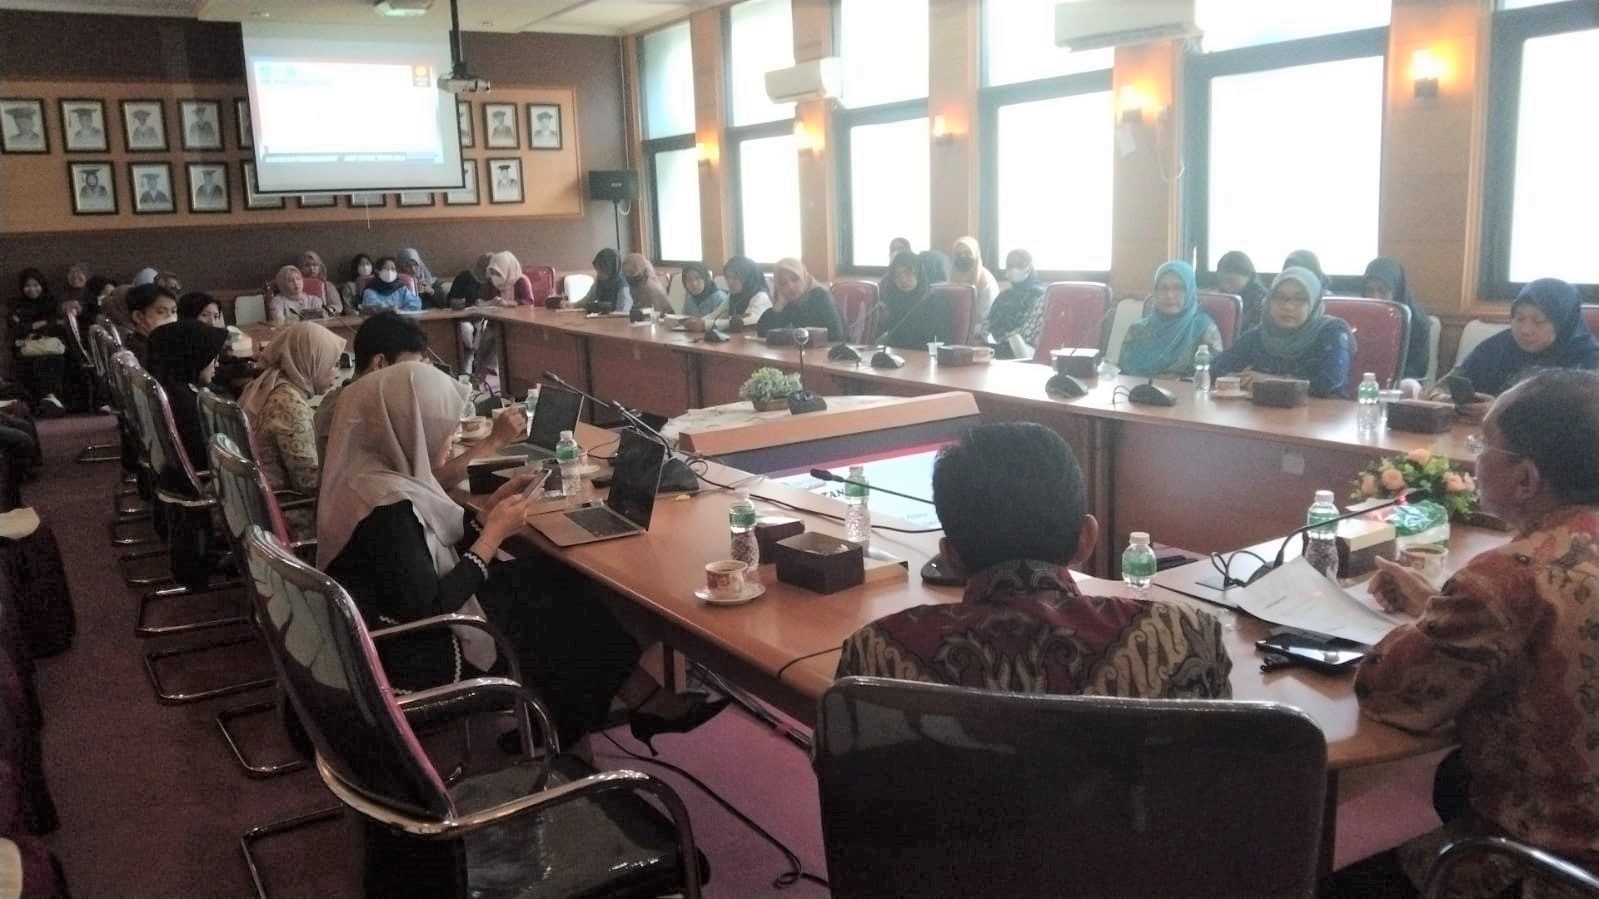 Visiting Profesor Guru Besar Fakultas Hukum UPN “Veteran” Jakarta